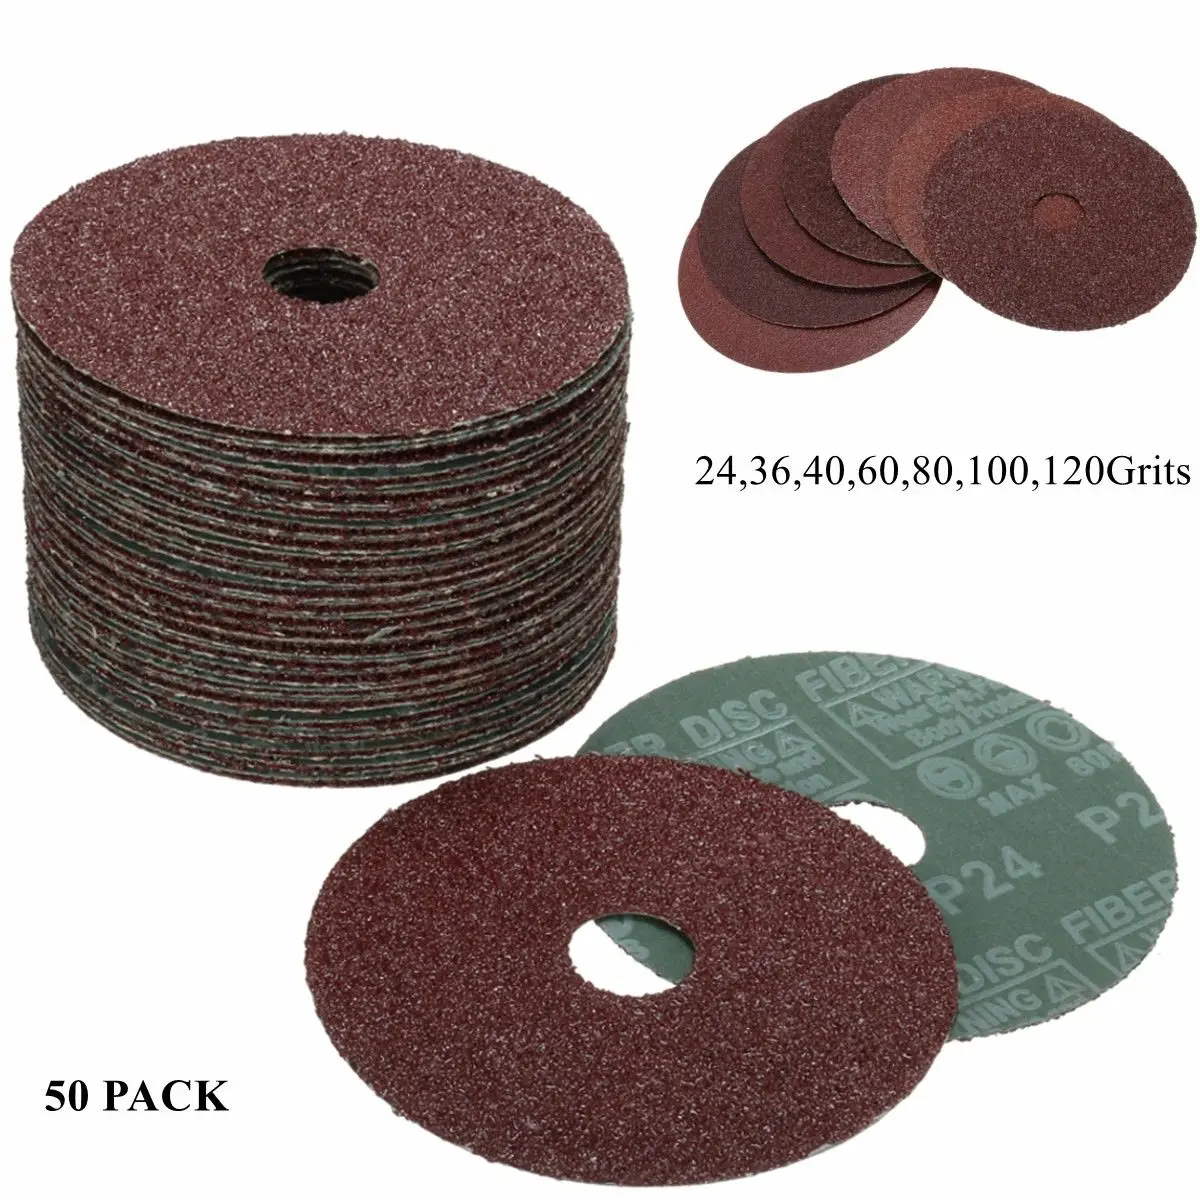 

50pcs/set Sanding Discs 115mm Fibre Sanding Grinding Discs Wheels 24-120 Grit Aluminum Oxide For Angle Grinder Surface Rust